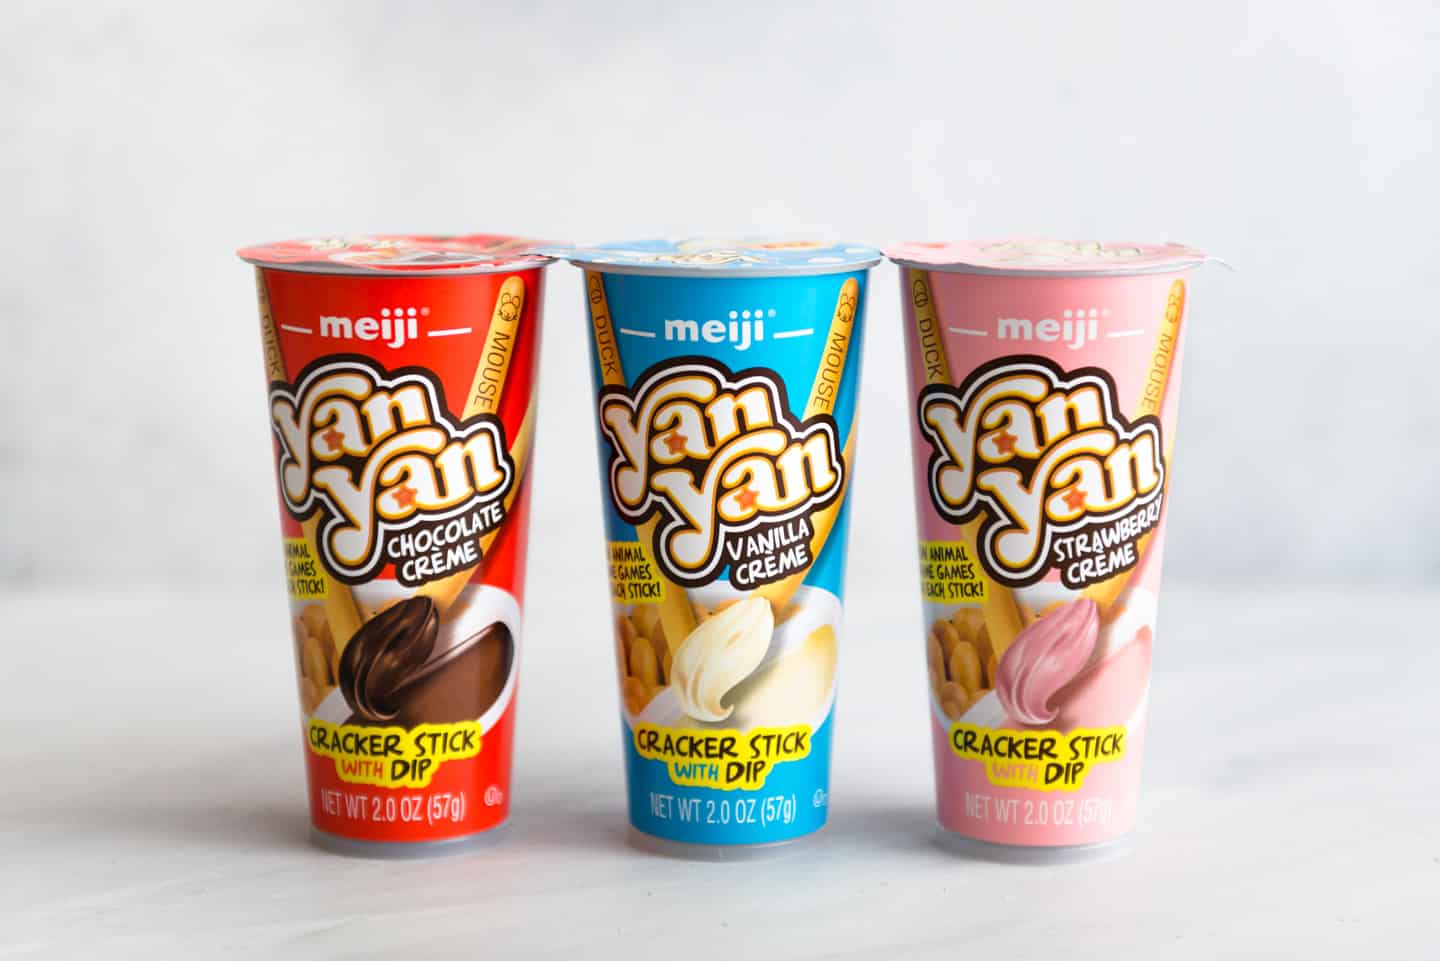 Yan Yan in Chocolate, Vanilla, and Strawberry Flavors